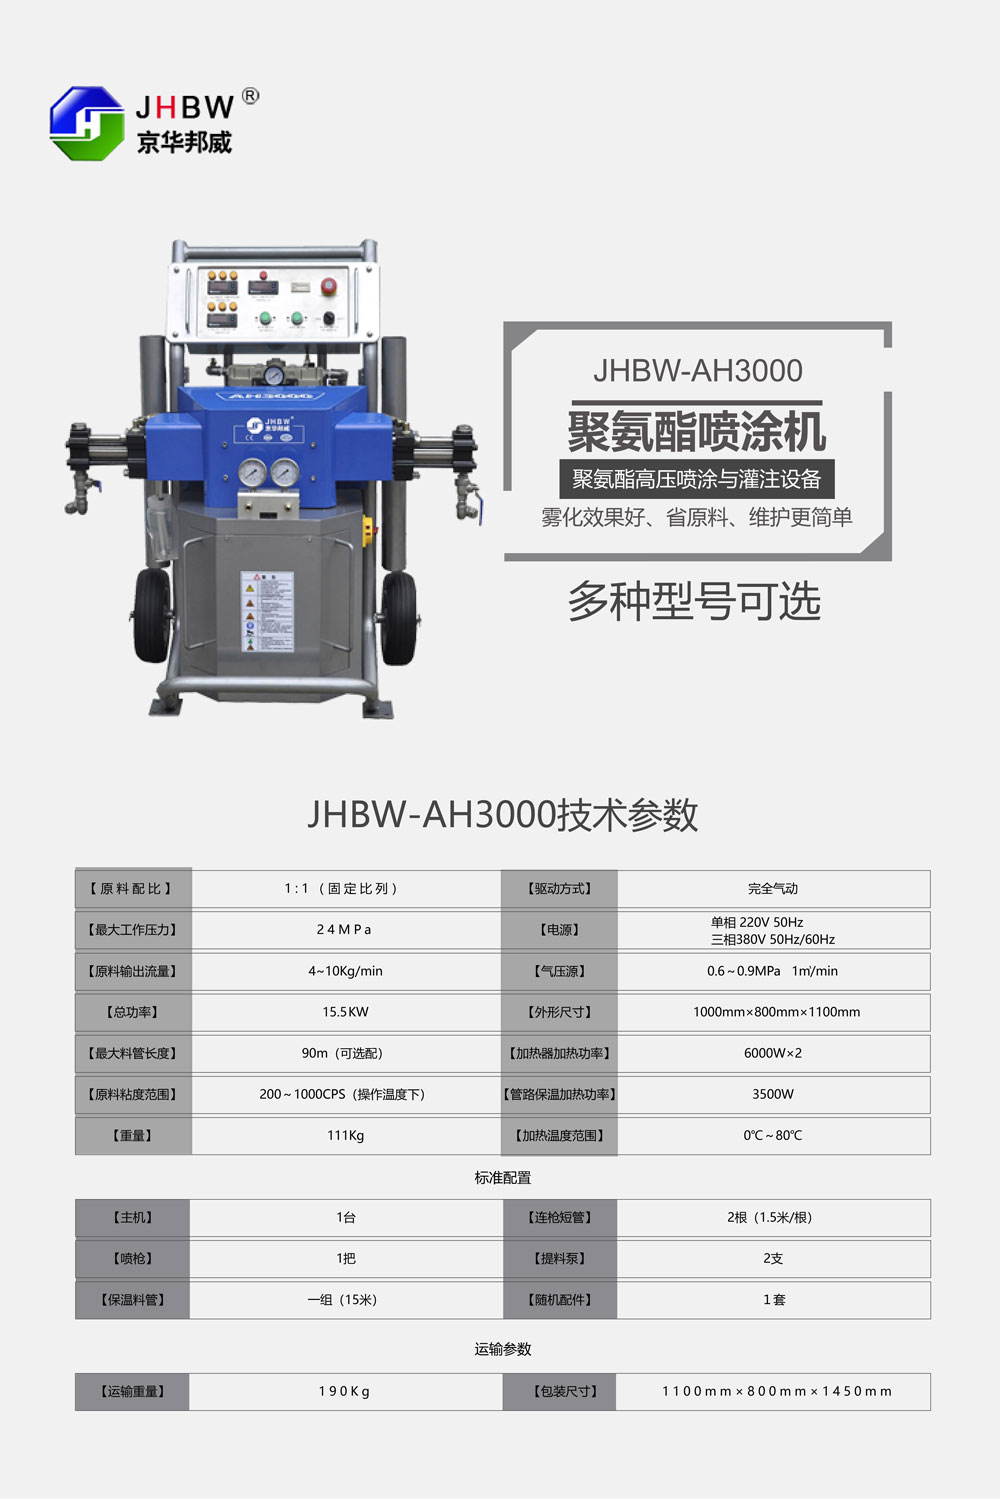 JHBW-AH3000聚氨酯喷涂设备